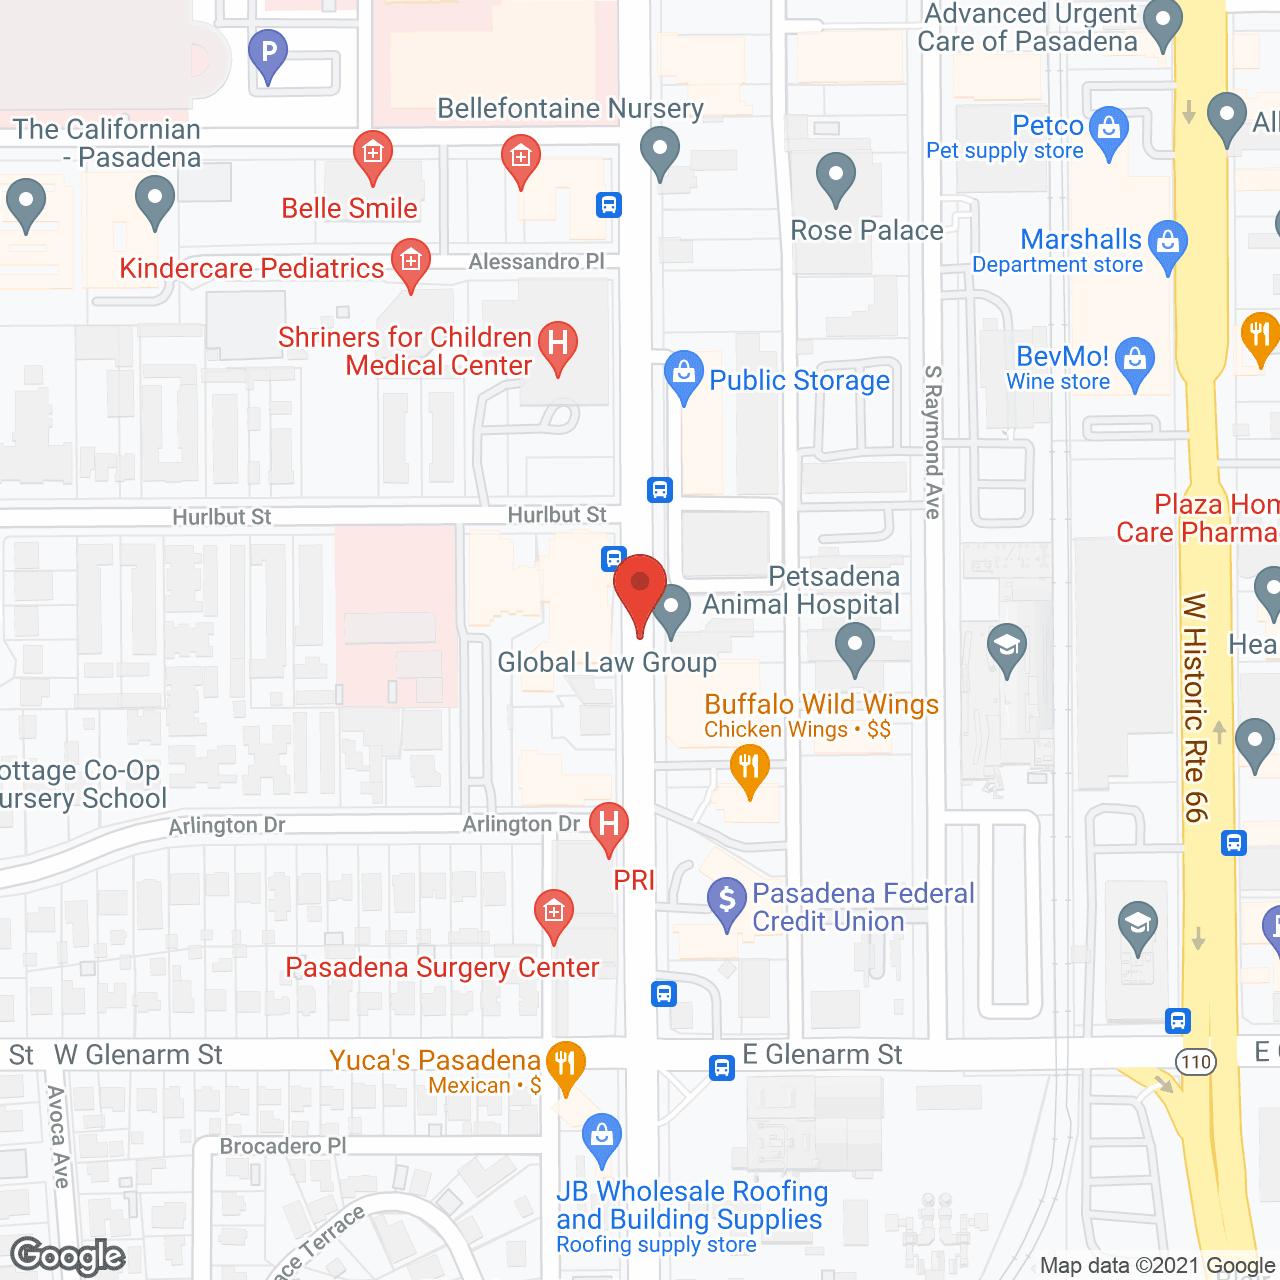 MorningStar of Pasadena in google map